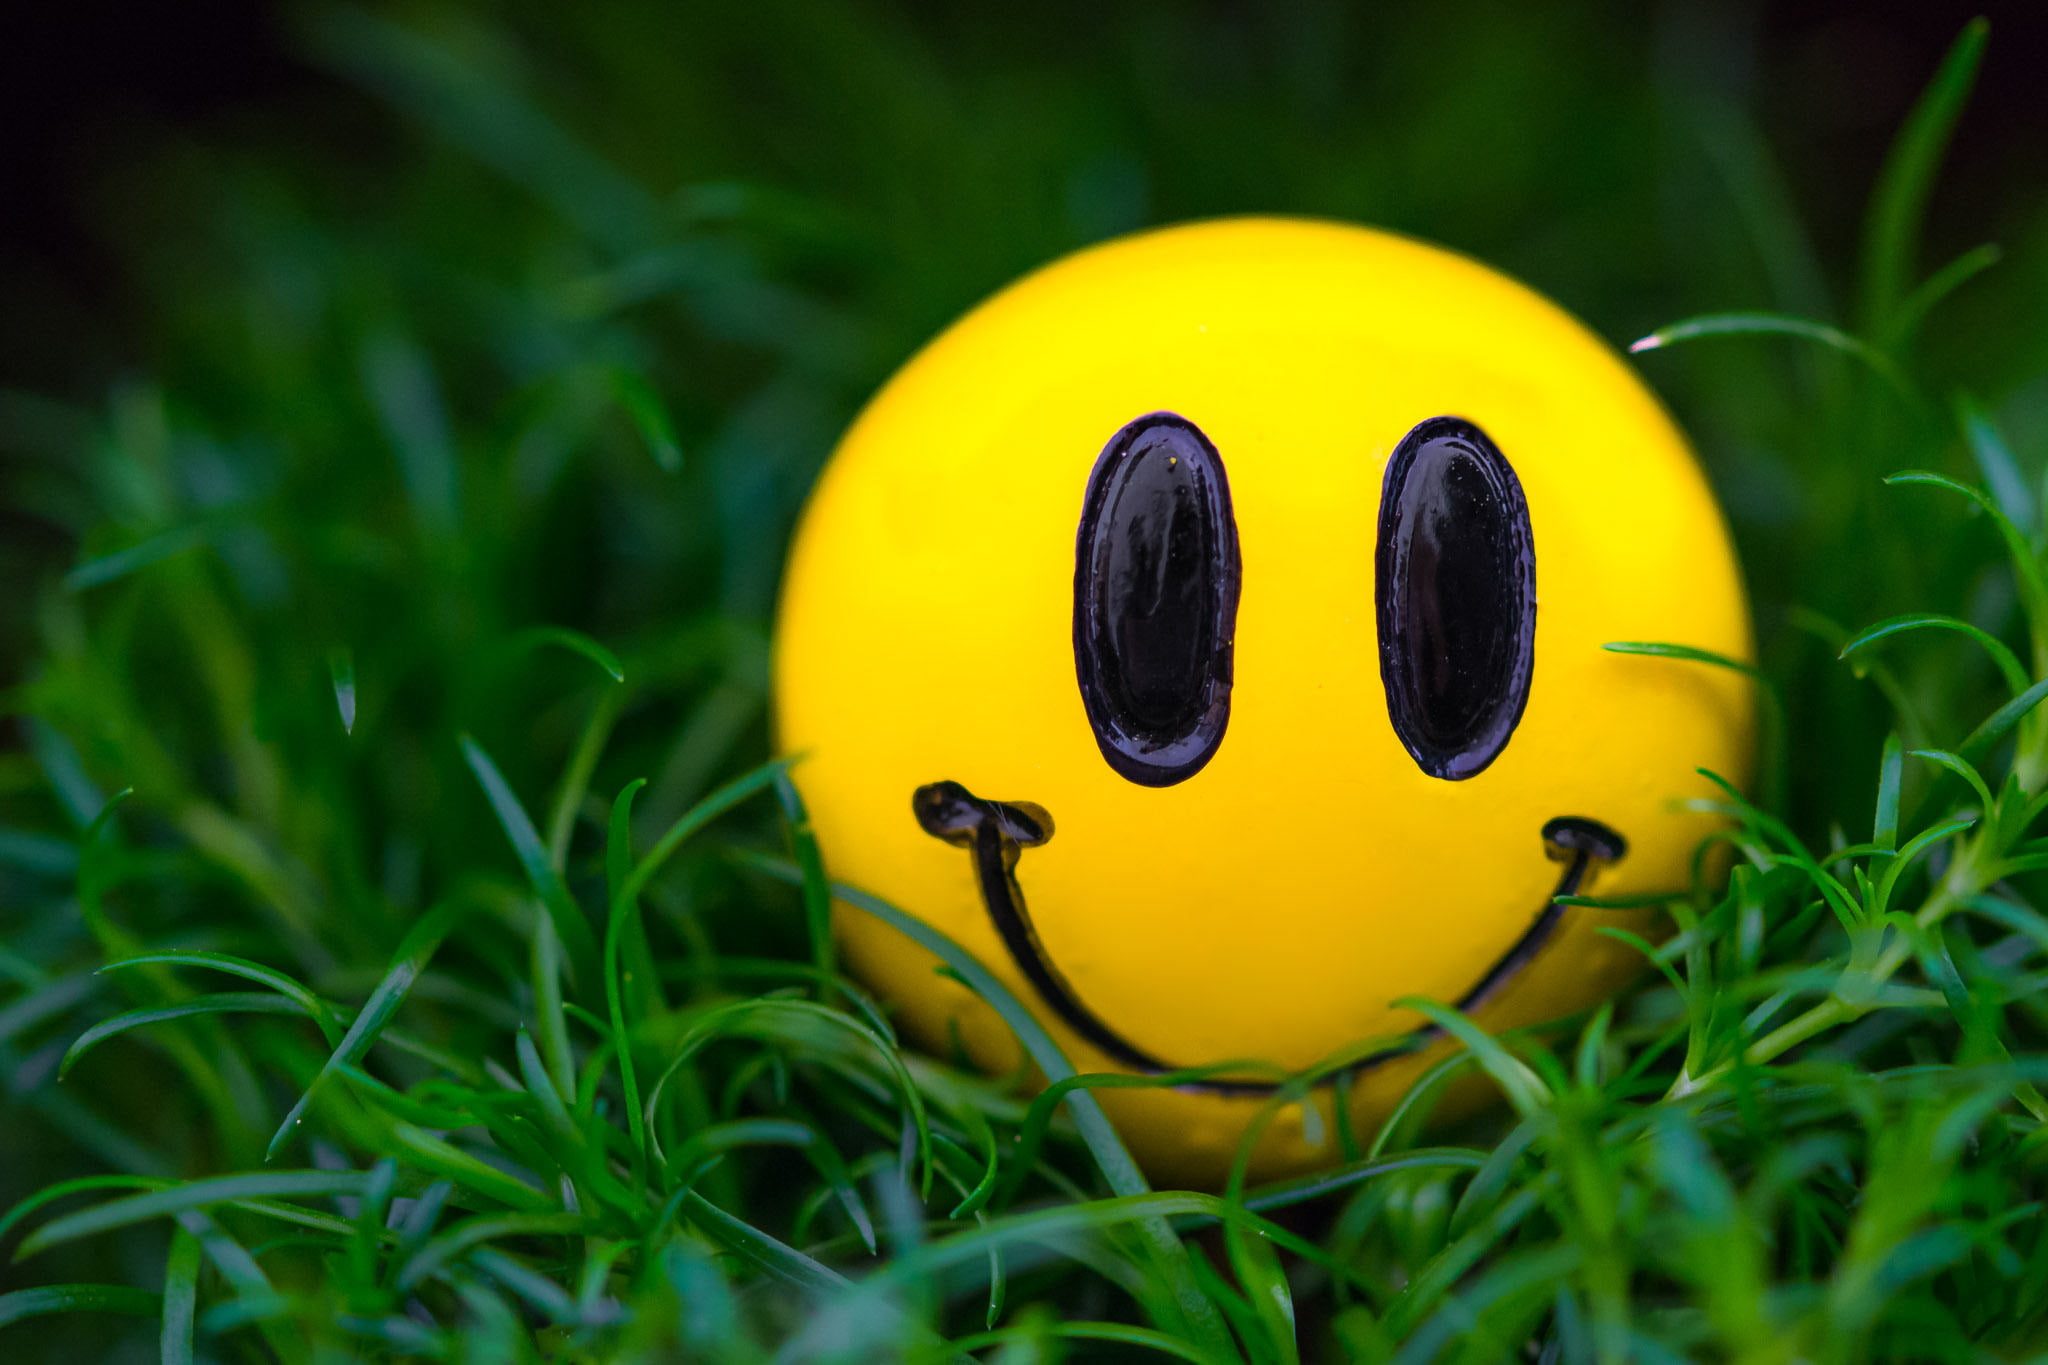 Yellow emoji ball wallpaper, grass, macro, smile, smiley, plant, close-up